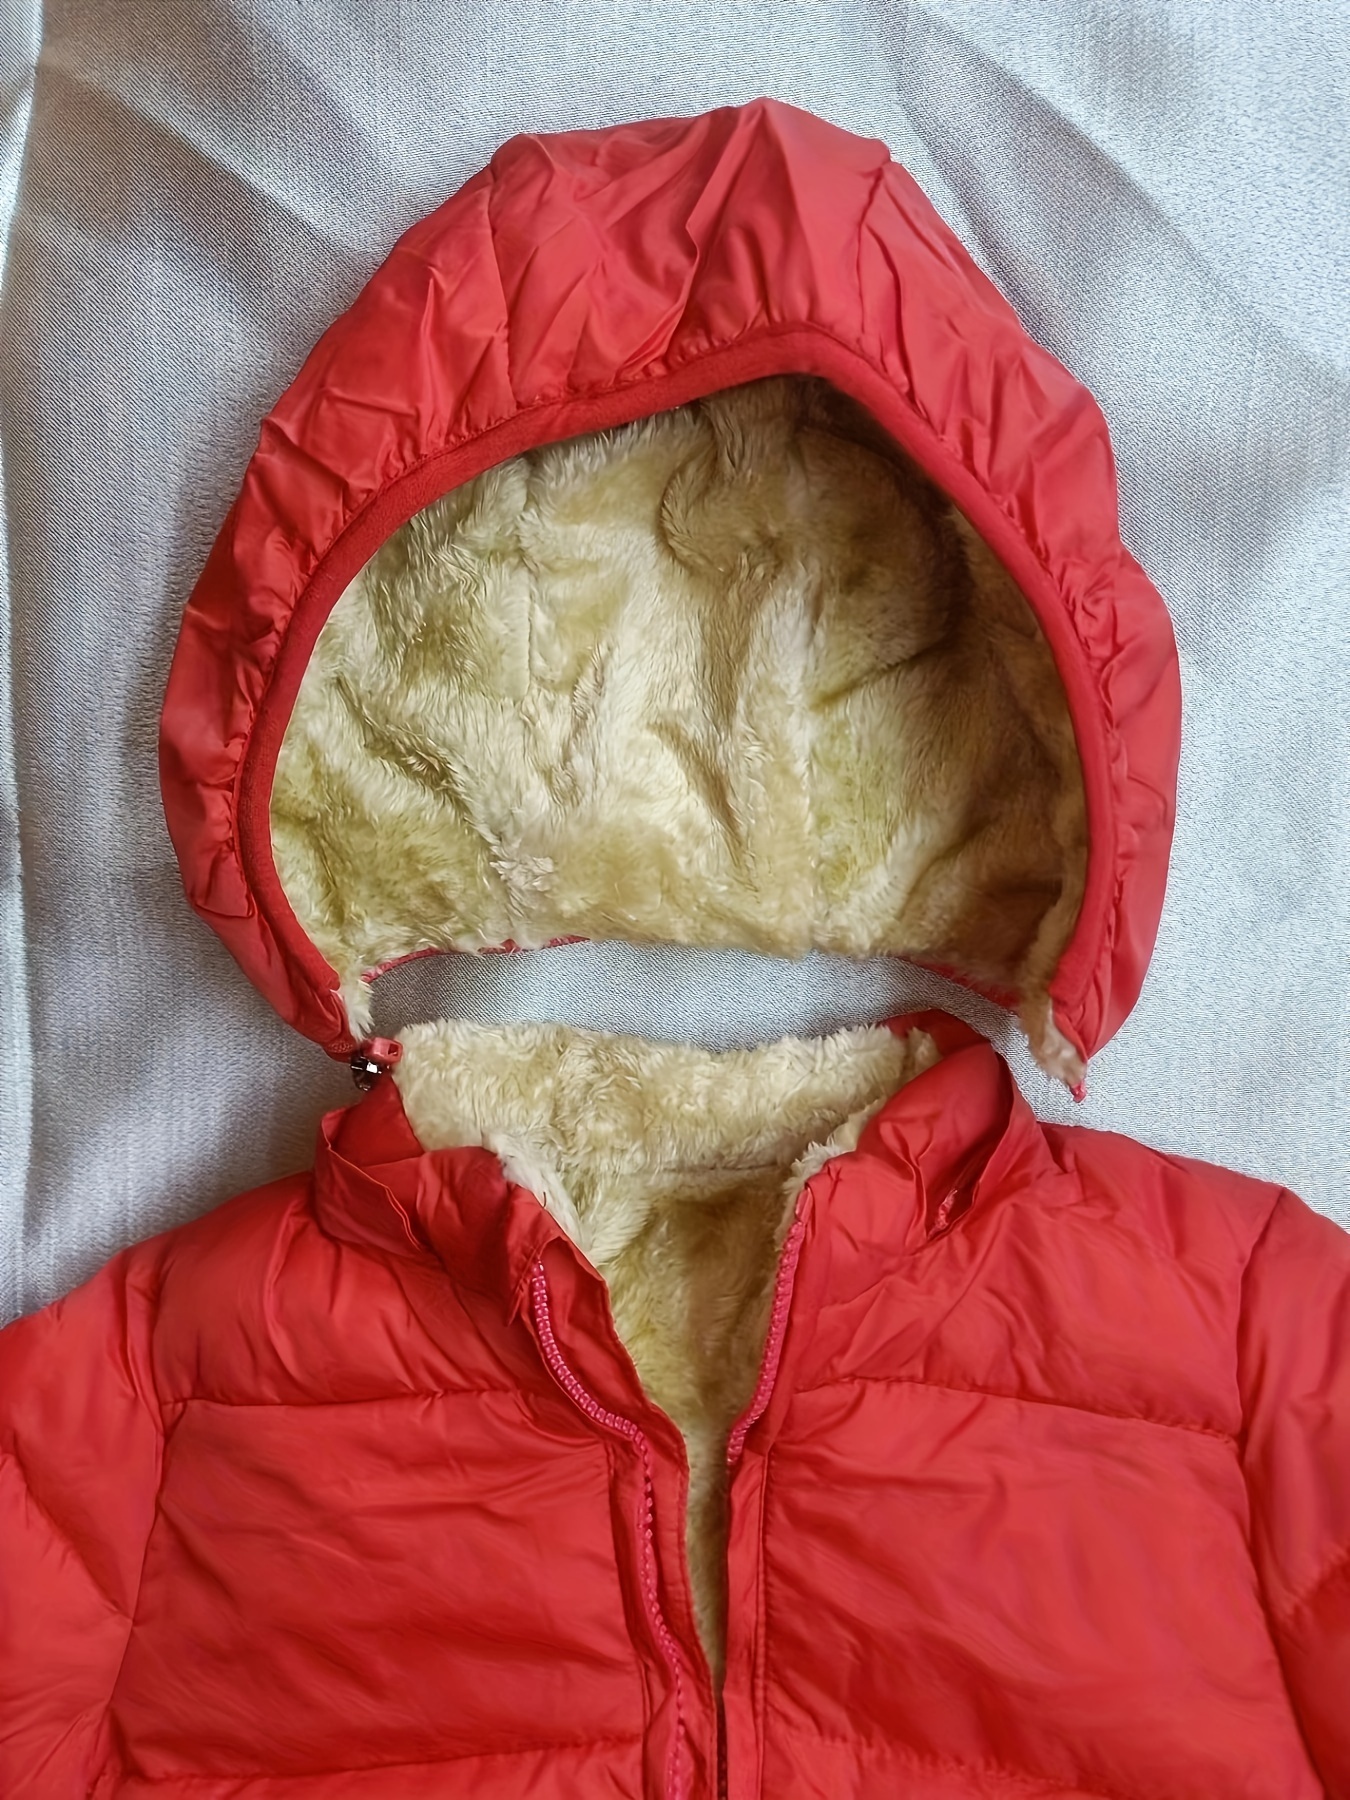 Ropa de abrigo para niñas: chaqueta acolchada, polar y más